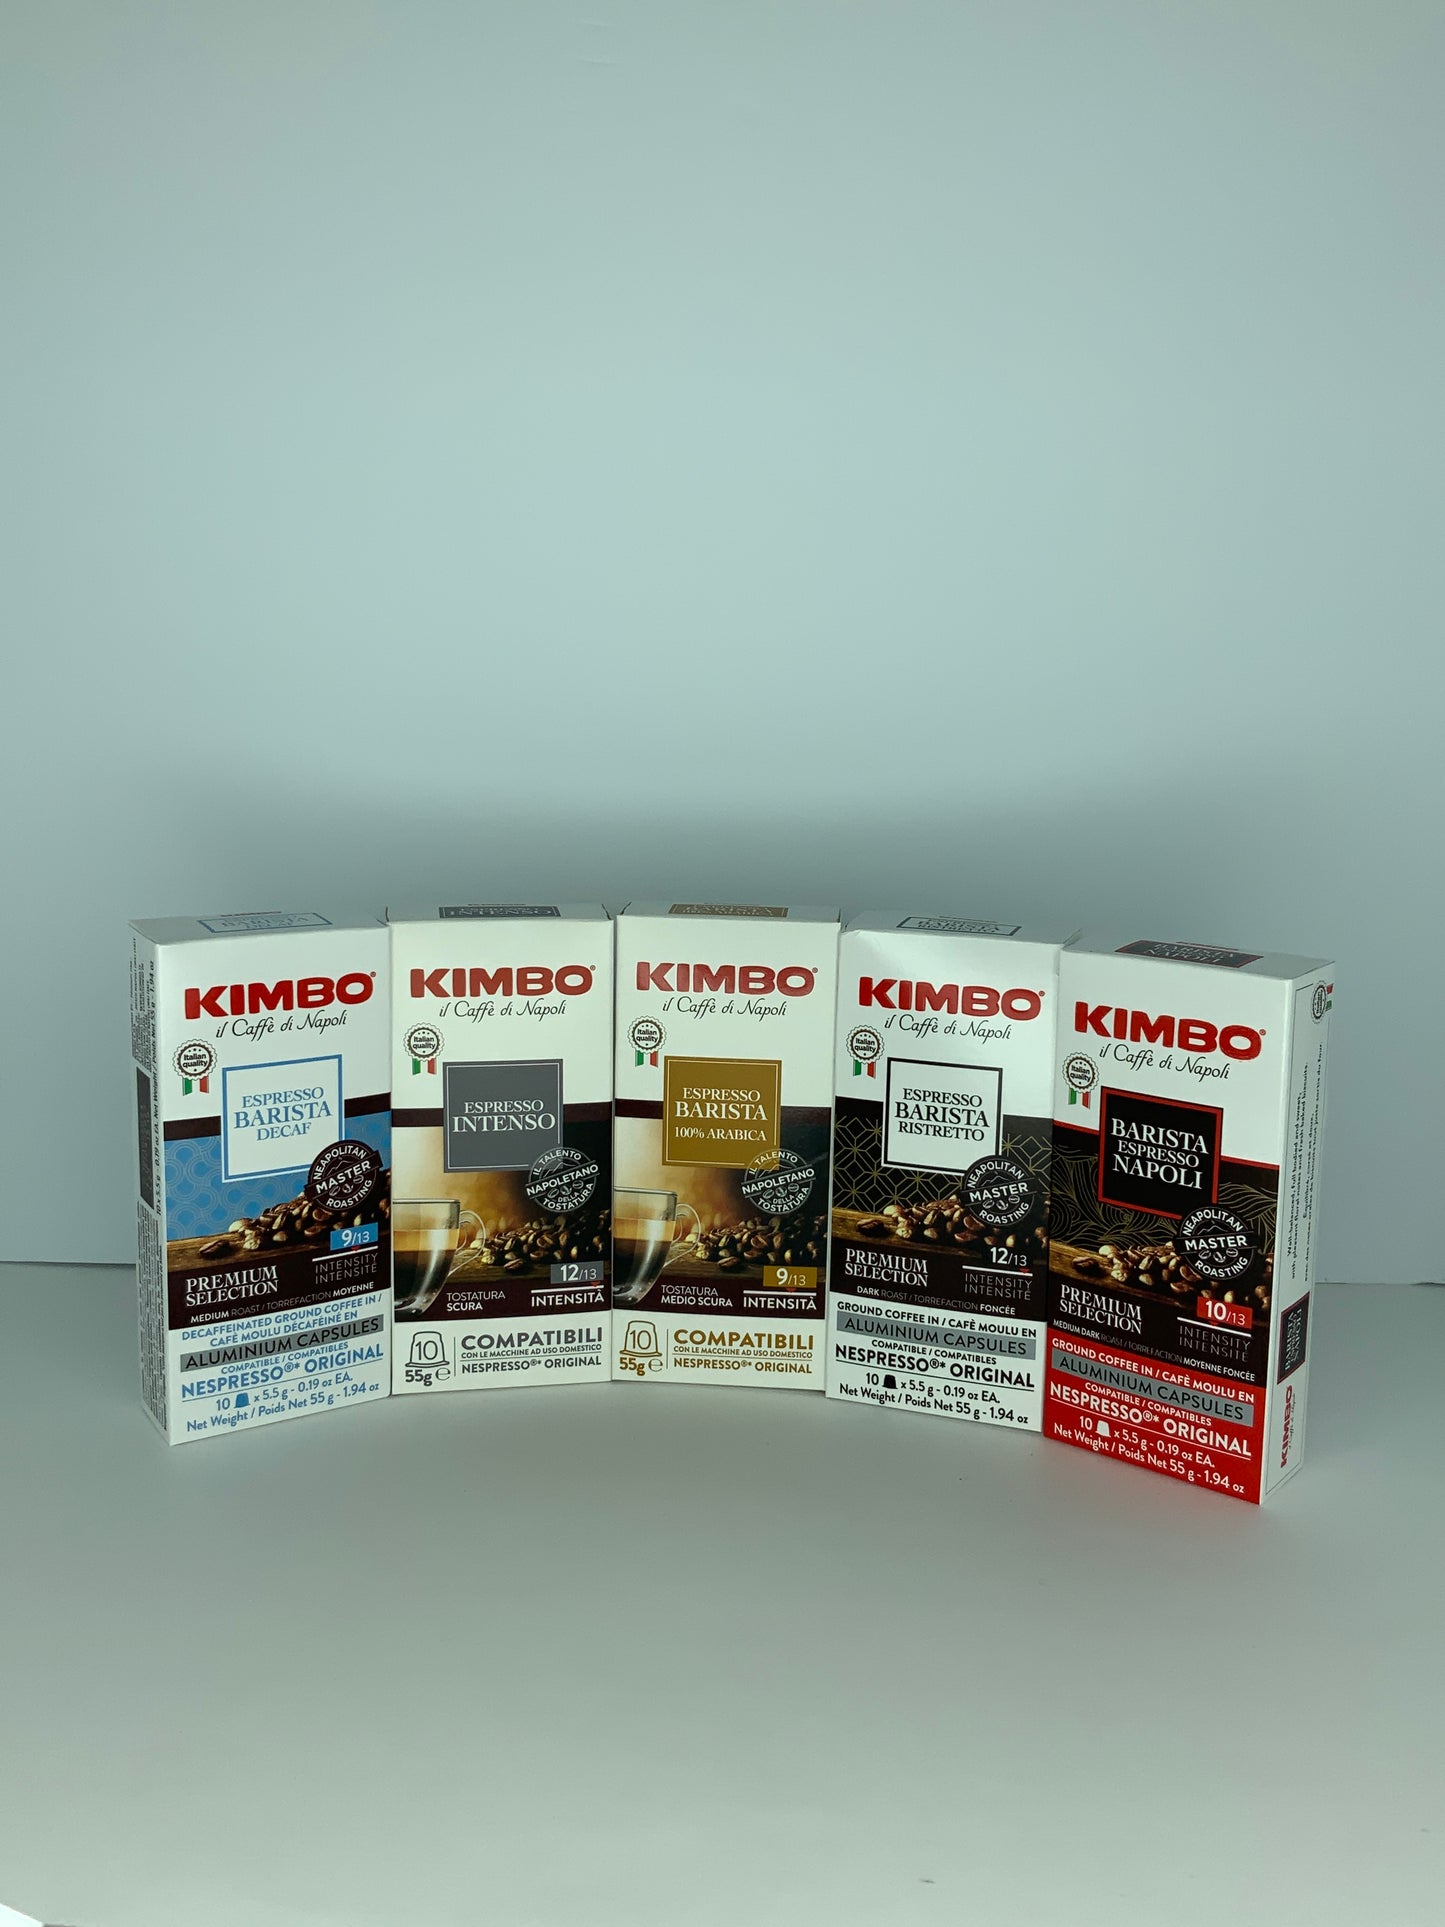 Kimbo Italian Coffee Capsule Collection